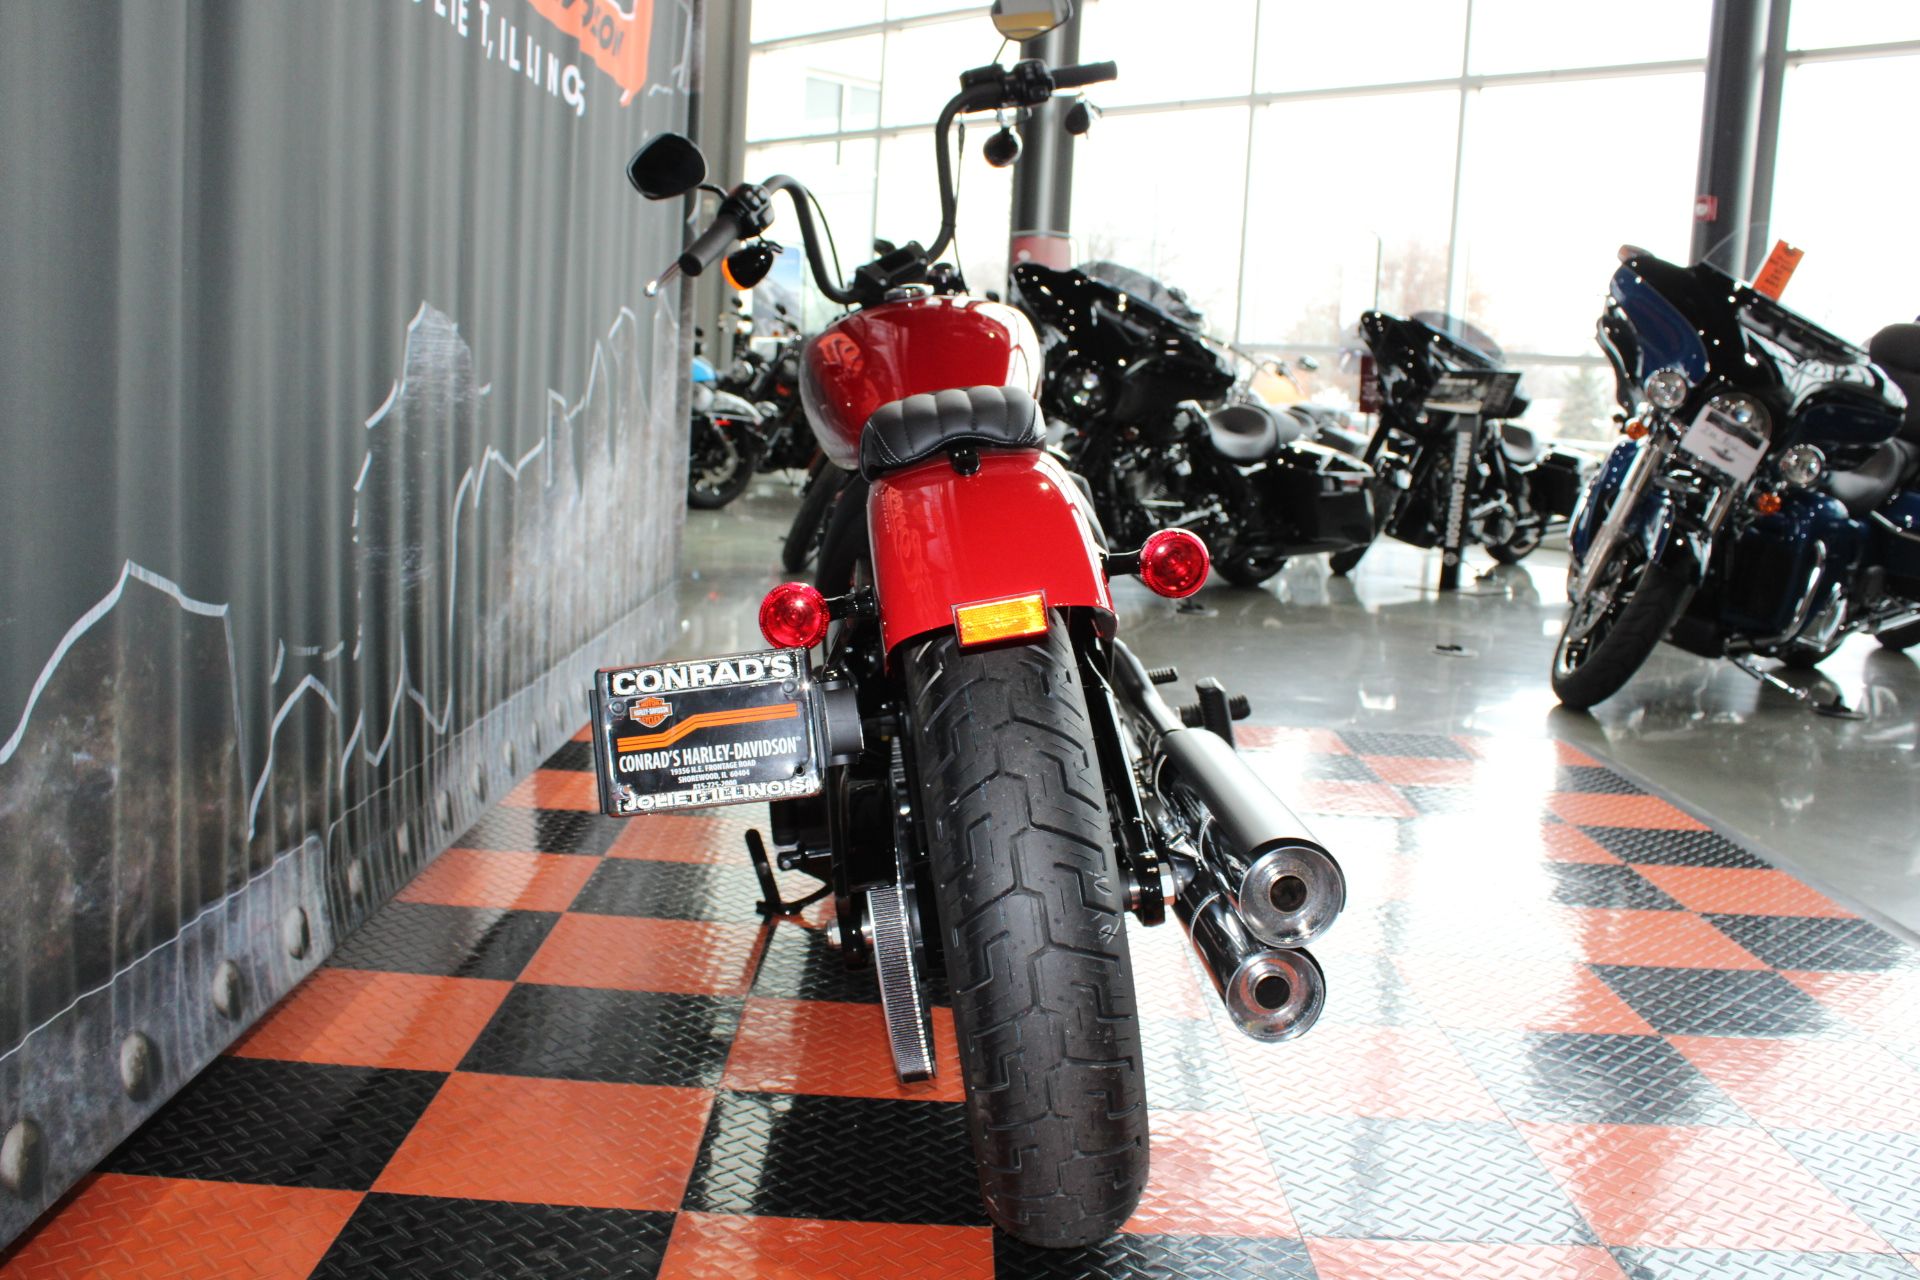 2022 Harley-Davidson Street Bob® 114 in Shorewood, Illinois - Photo 13